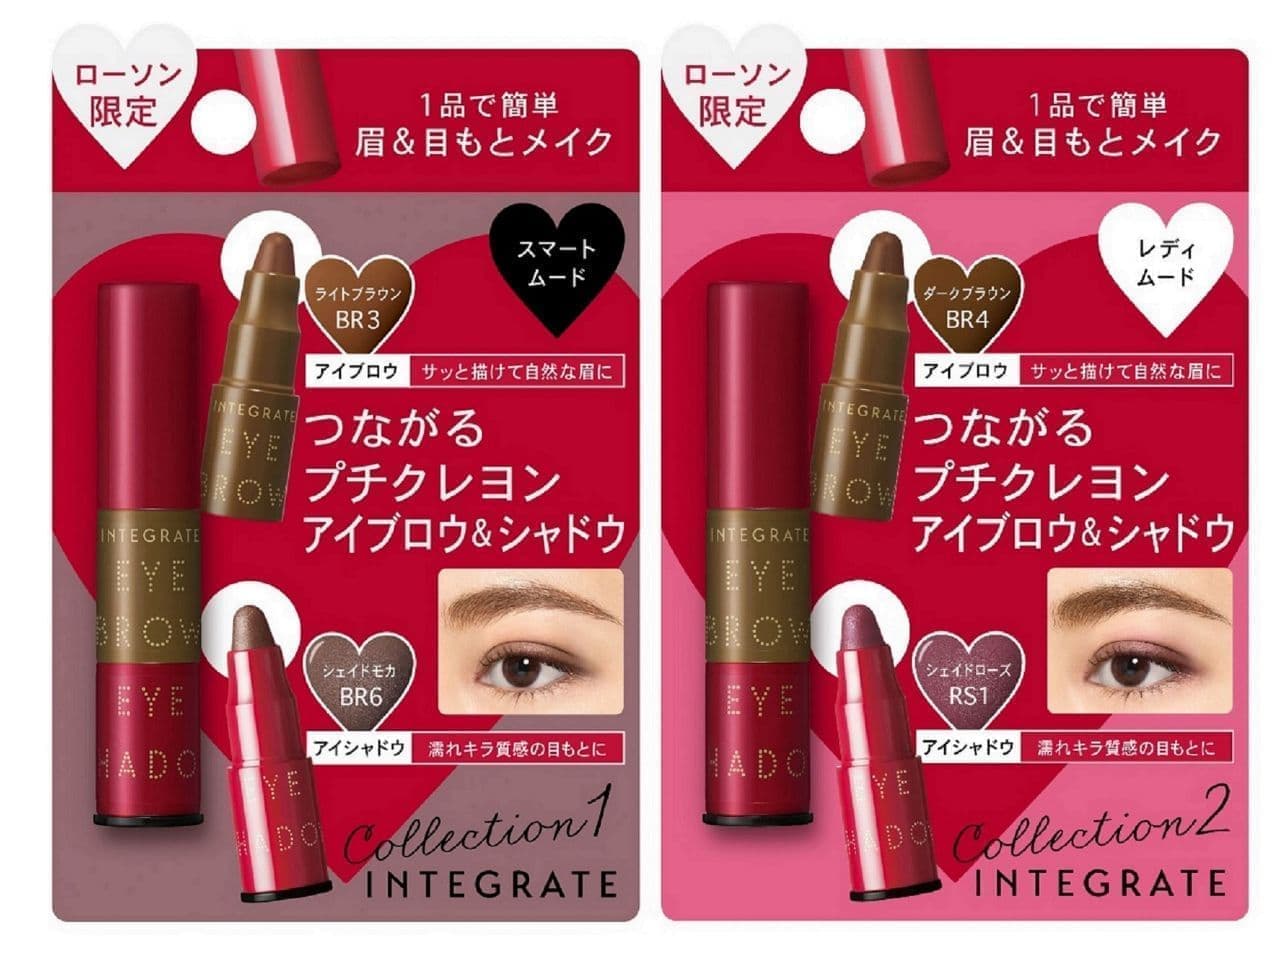 Lawson "Integrate Petit Crayon Eyebrow & Shadow Mini Set